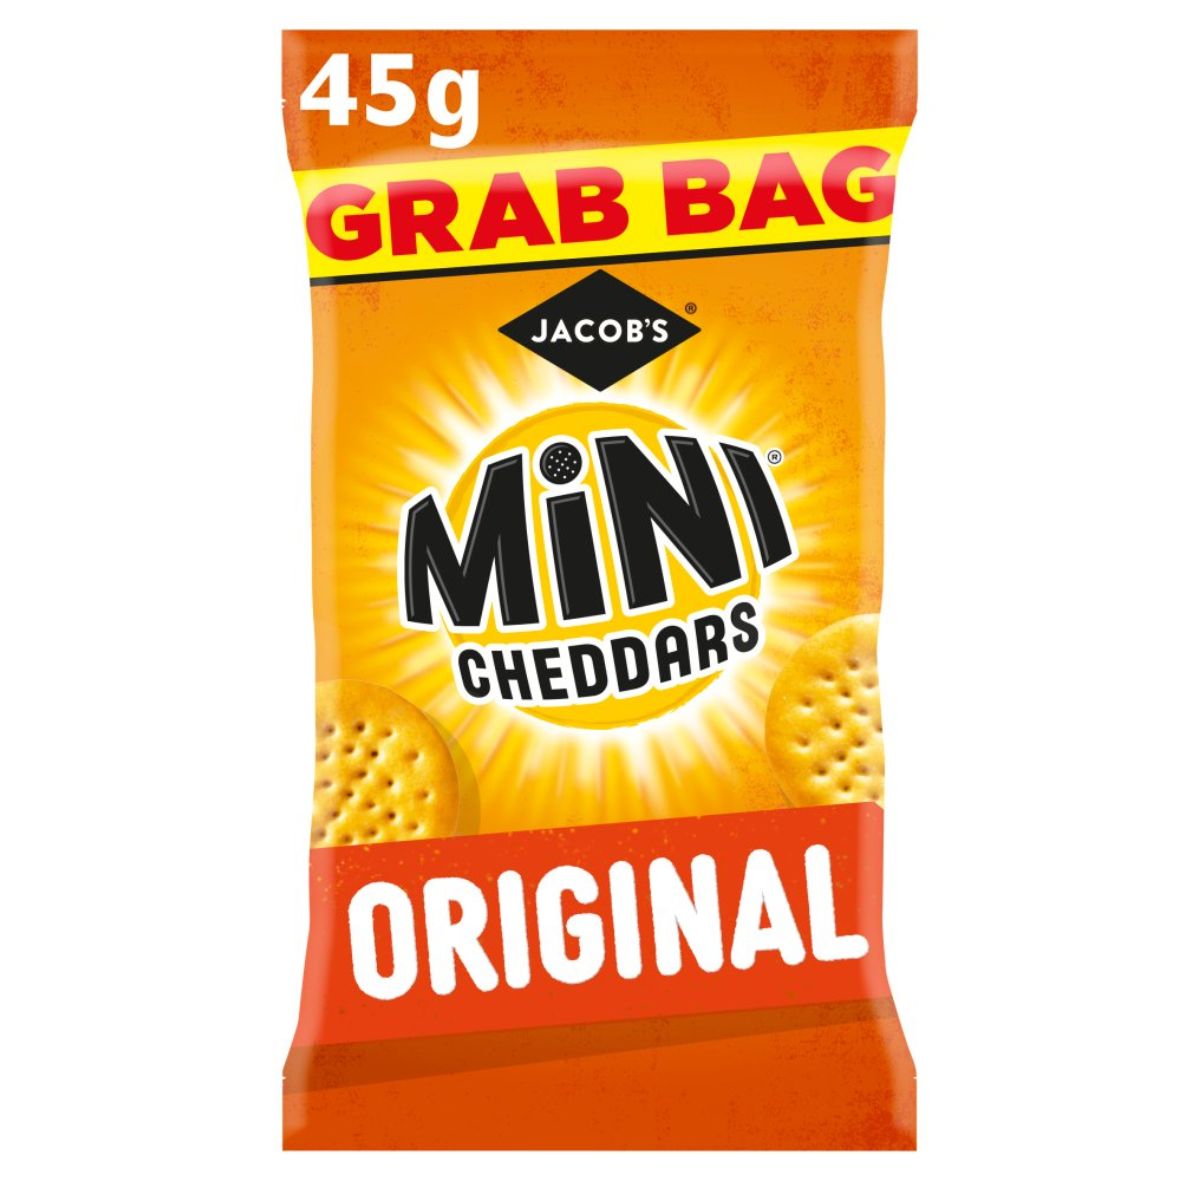 A Jacobs - Mini Cheddars Original Snacks Grab Bag - 45g of mini cheddars.